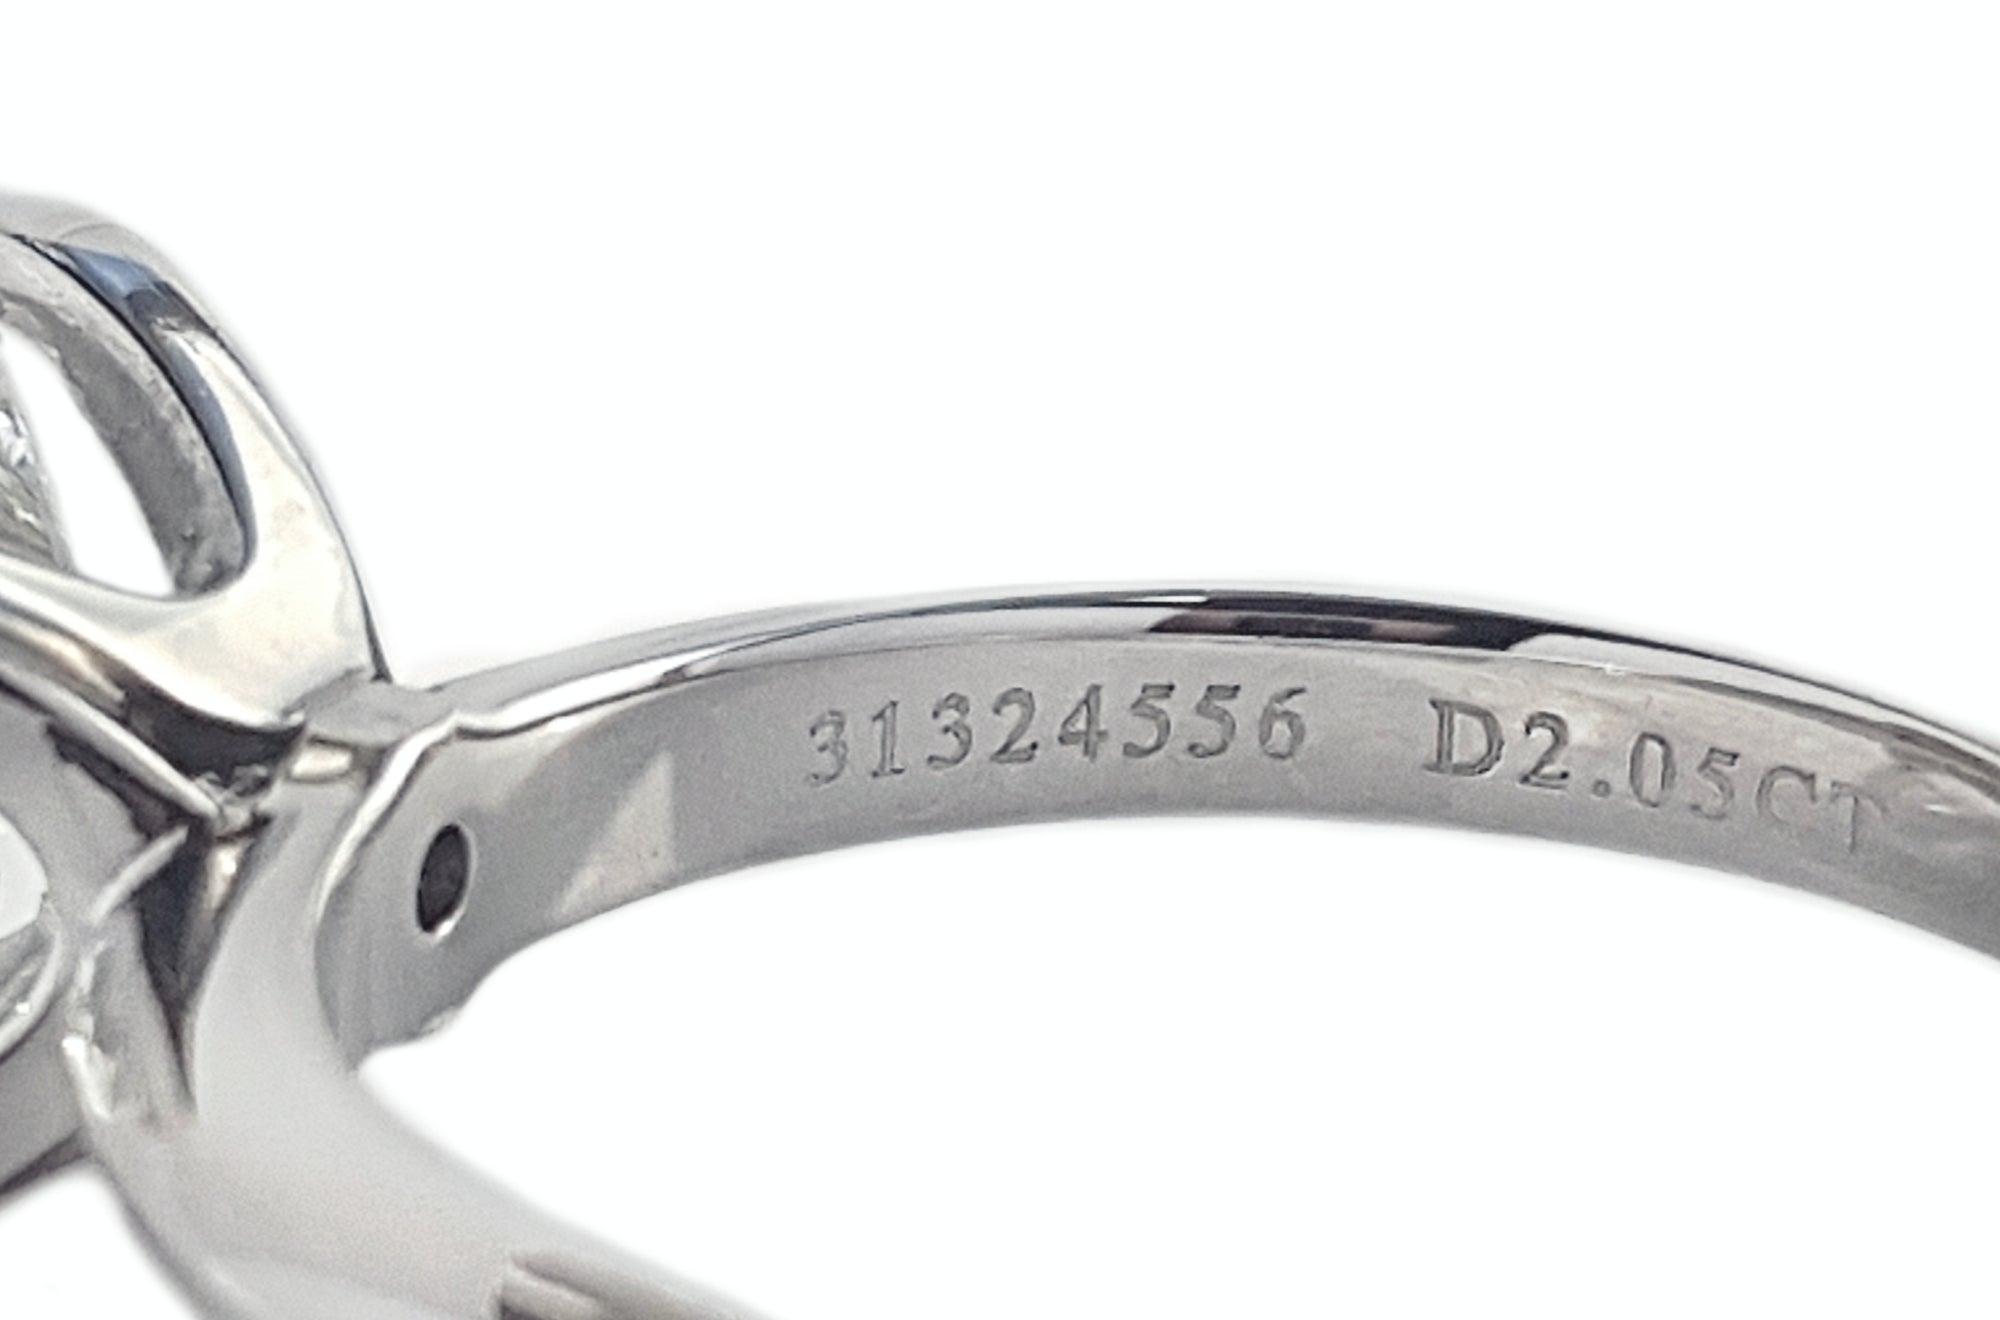 Tiffany & Co. 2.05ct G/VS1 Princess Cut Diamond Engagement Ring